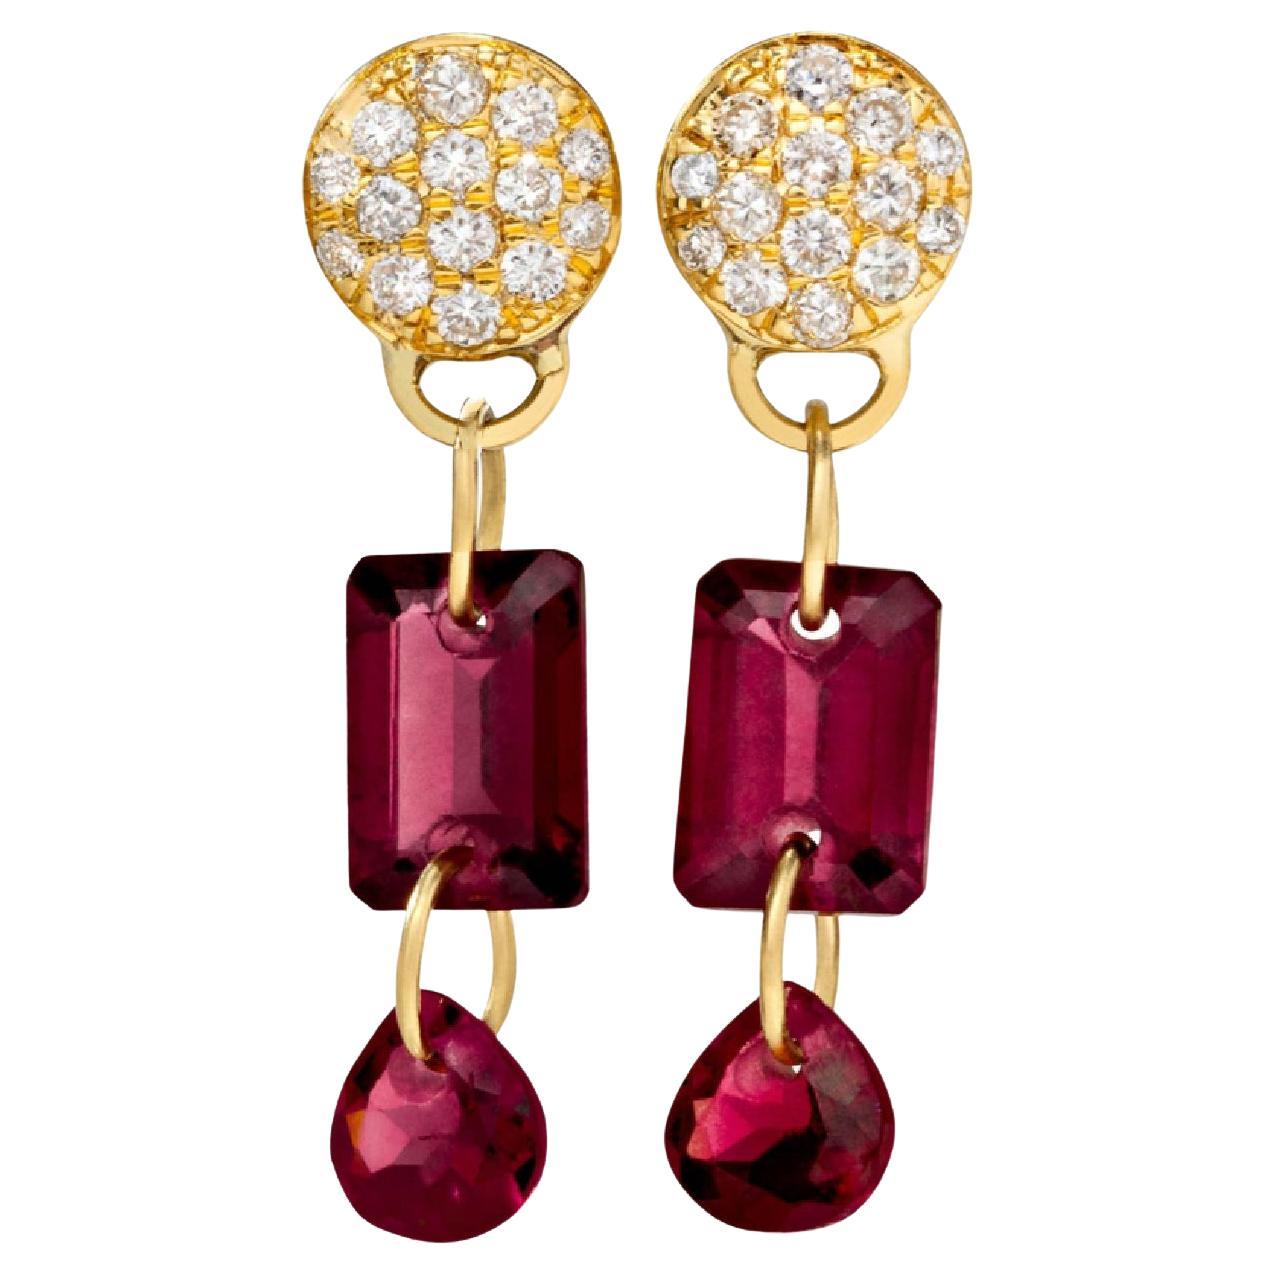 Paris & Lily handmade, 18K gold earrings with pave diamond studs & garnets